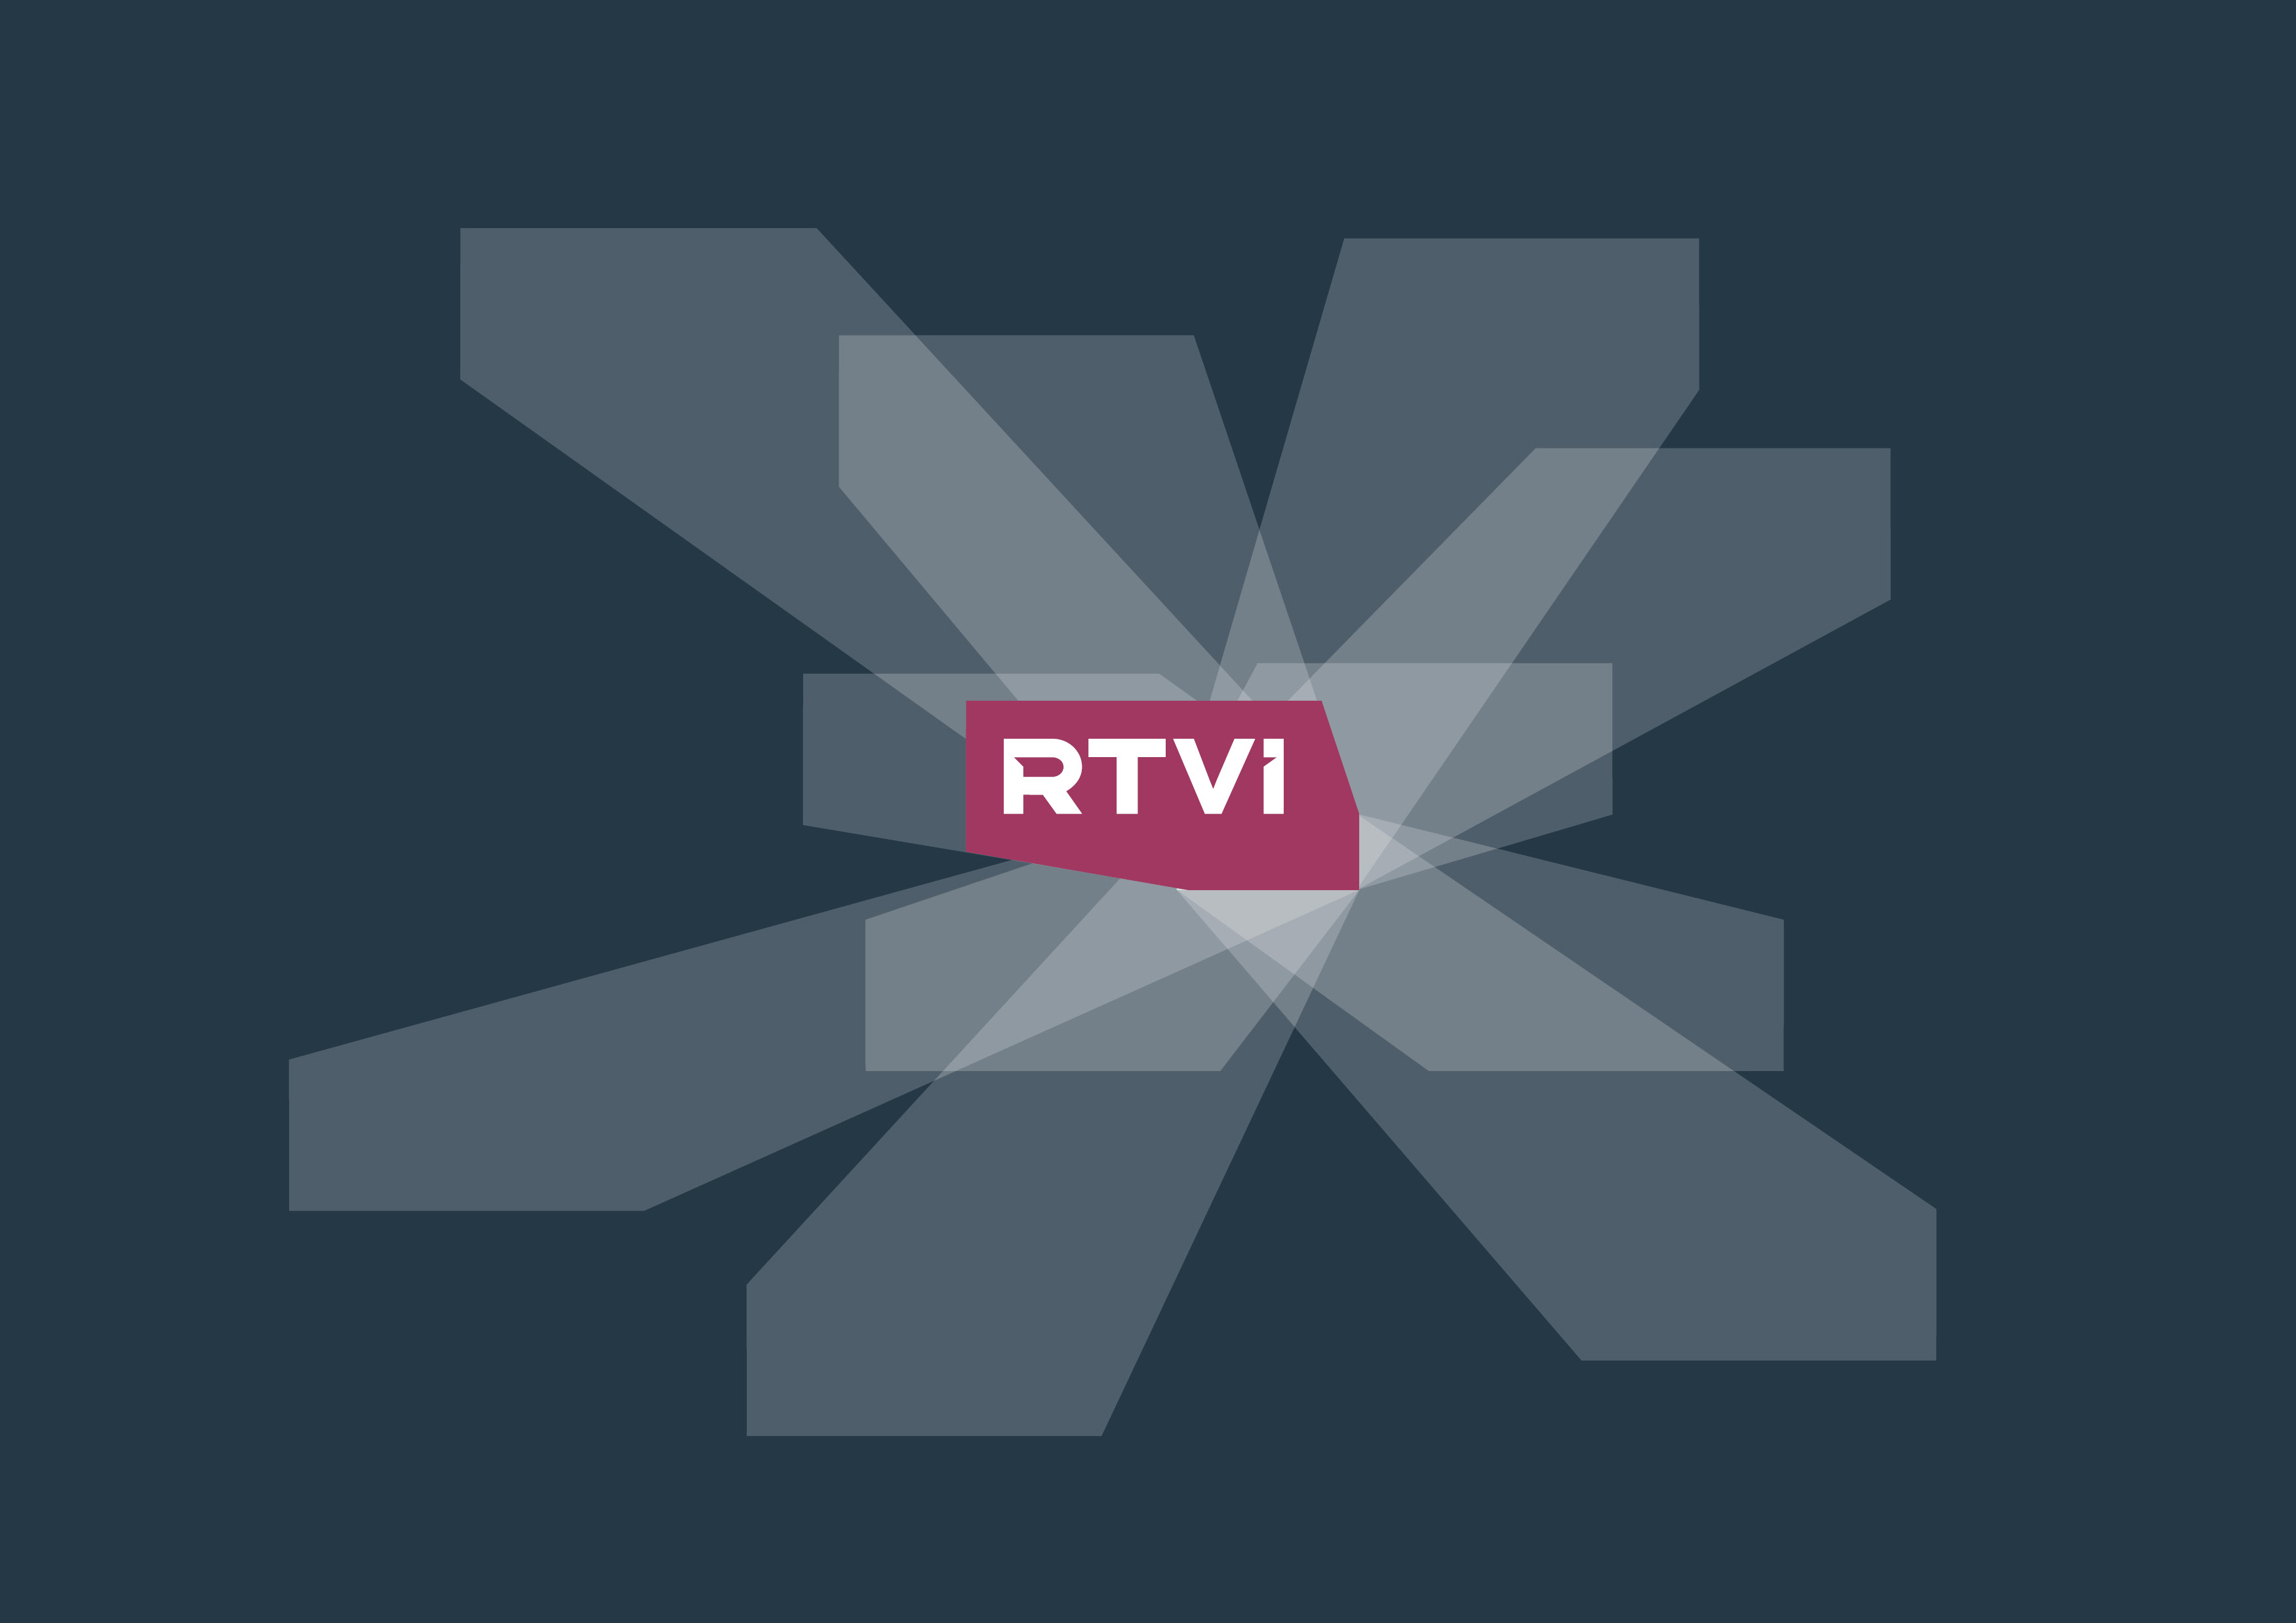 rtvi_publish_notext4